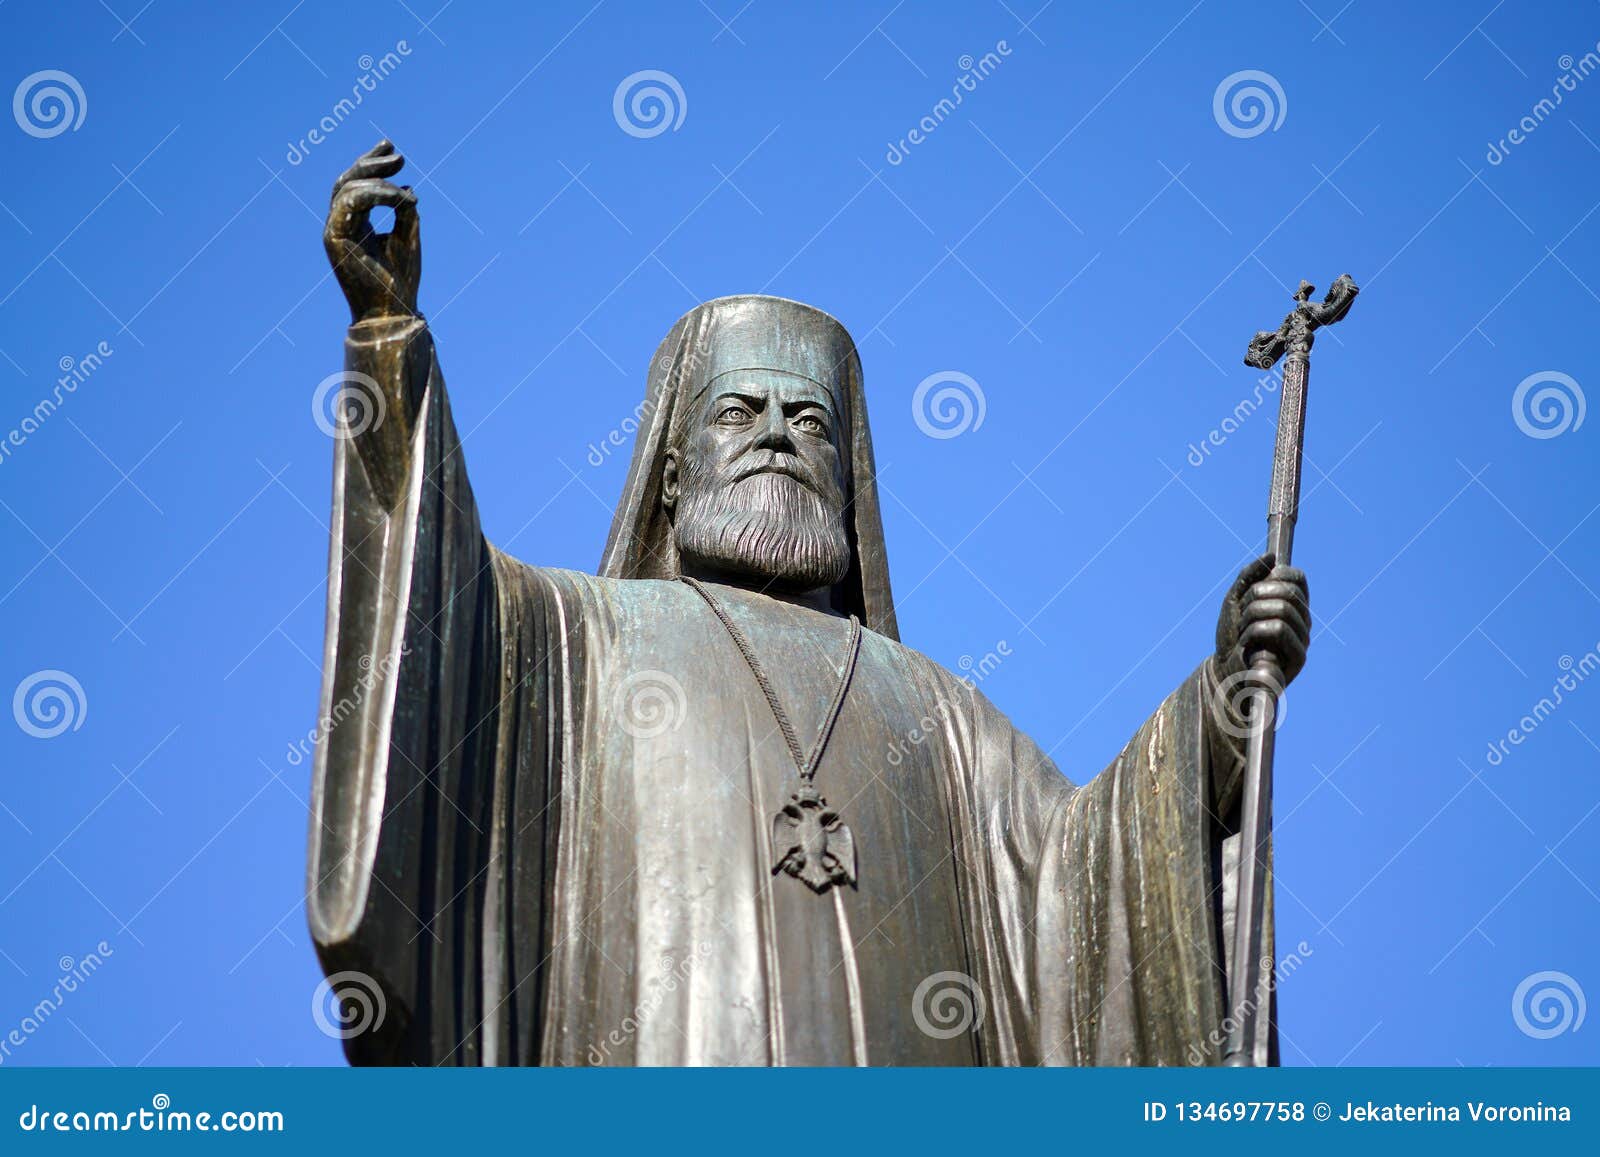 statue of the archibishop damaskinos in metropoli square, in athens